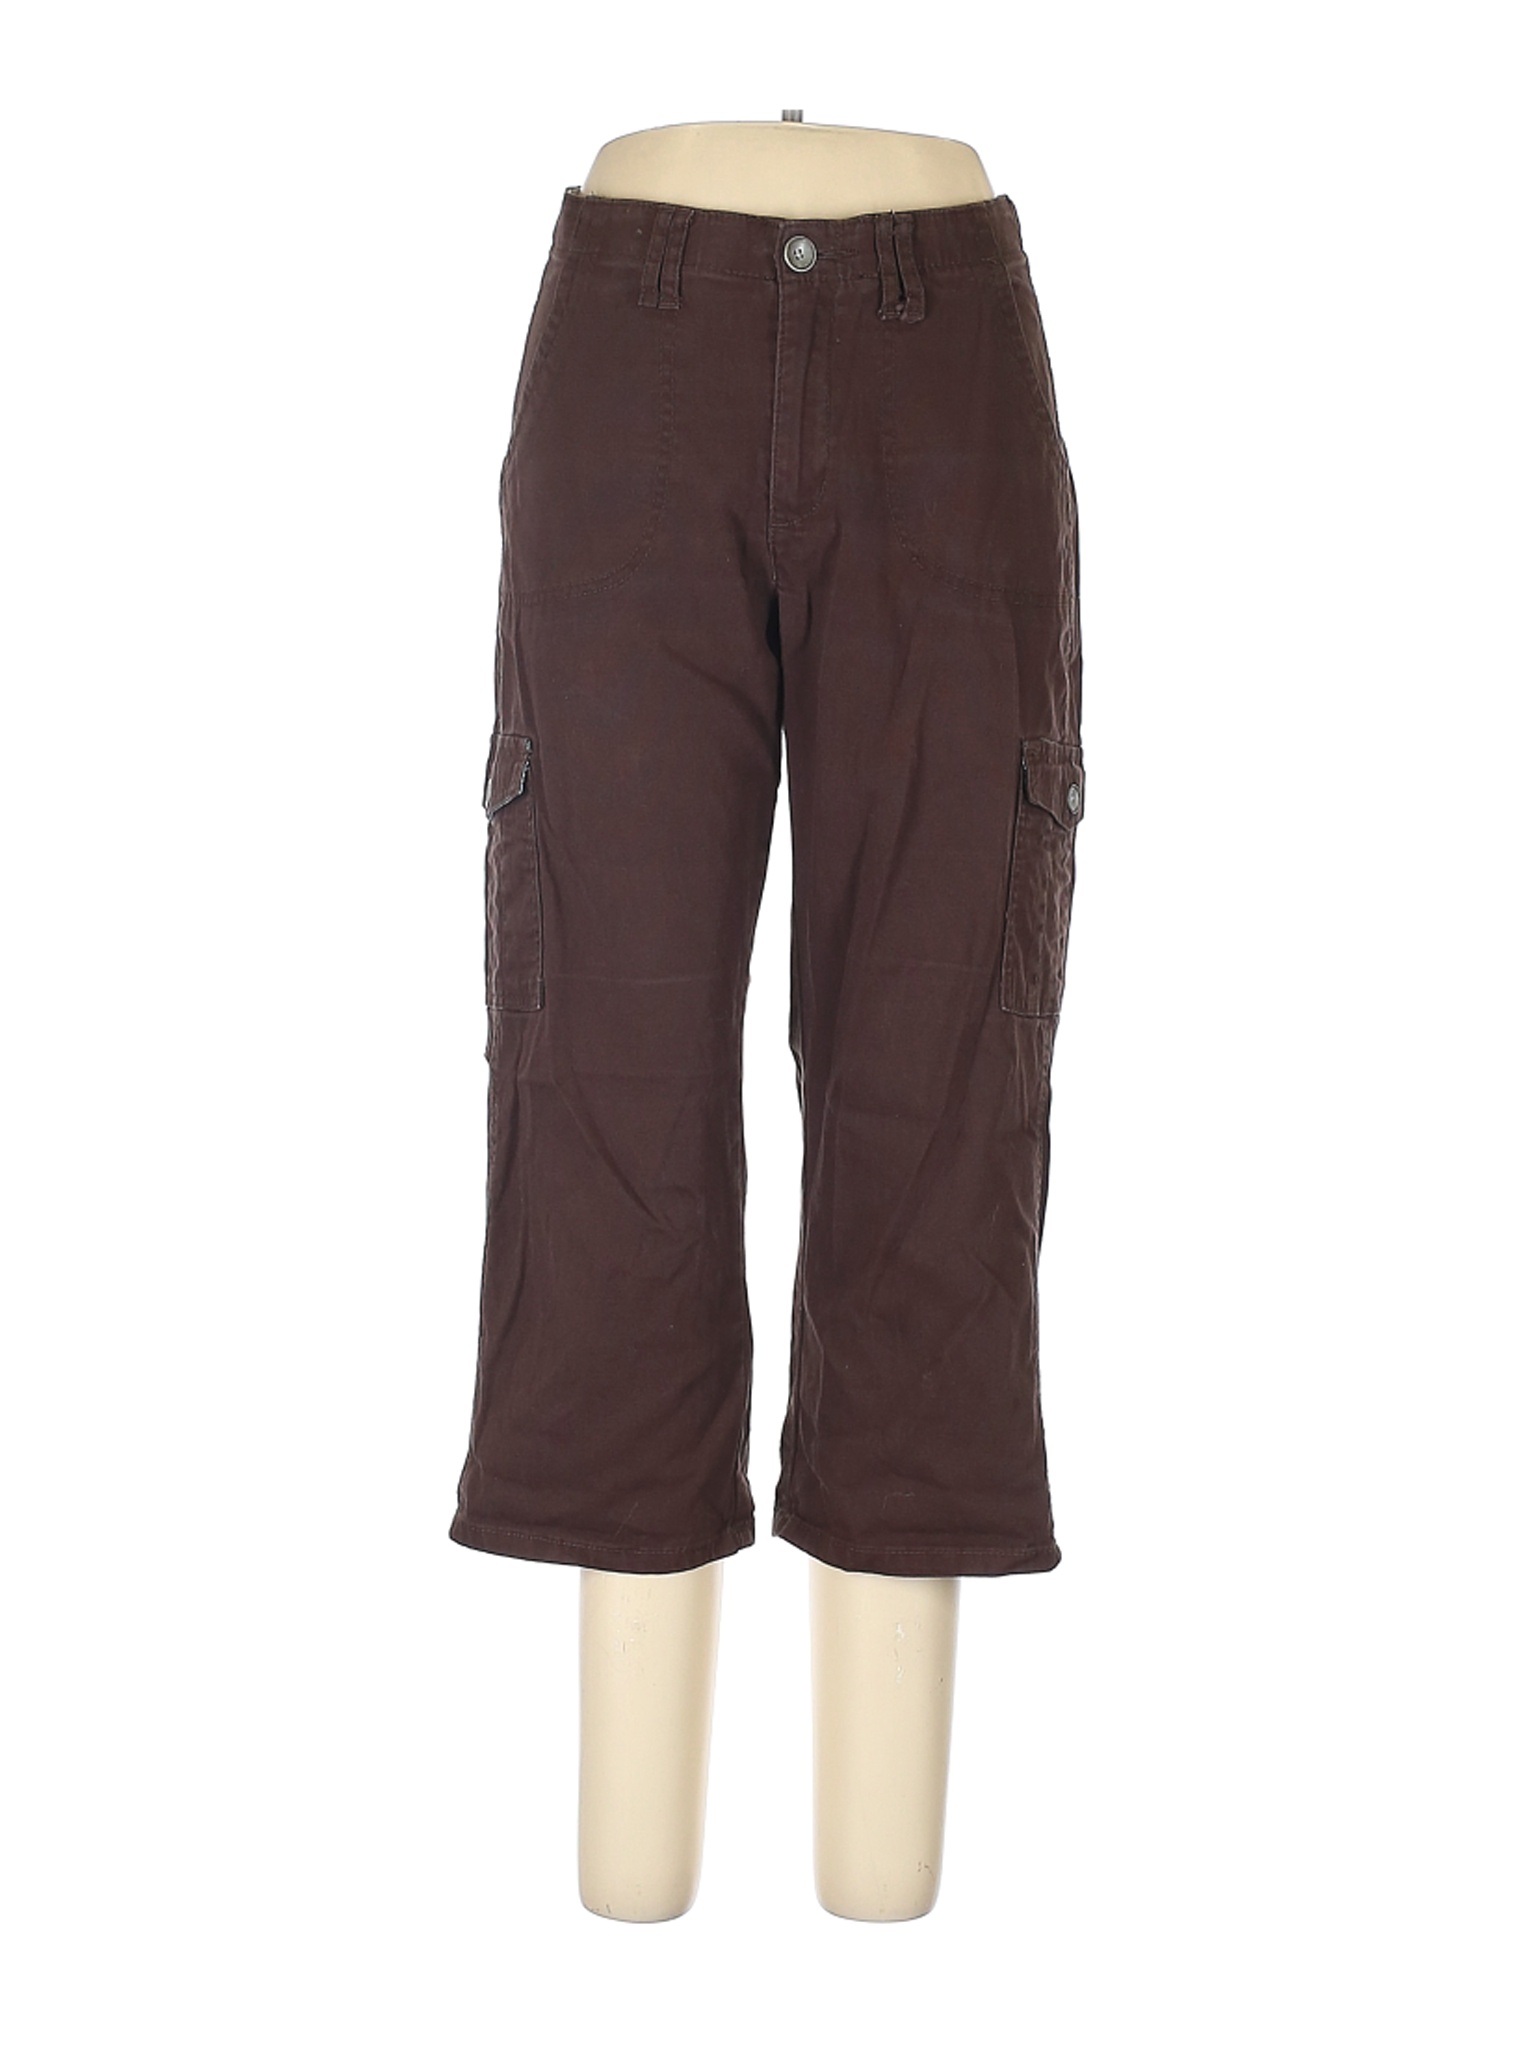 Lee Women Brown Cargo Pants 10 | eBay